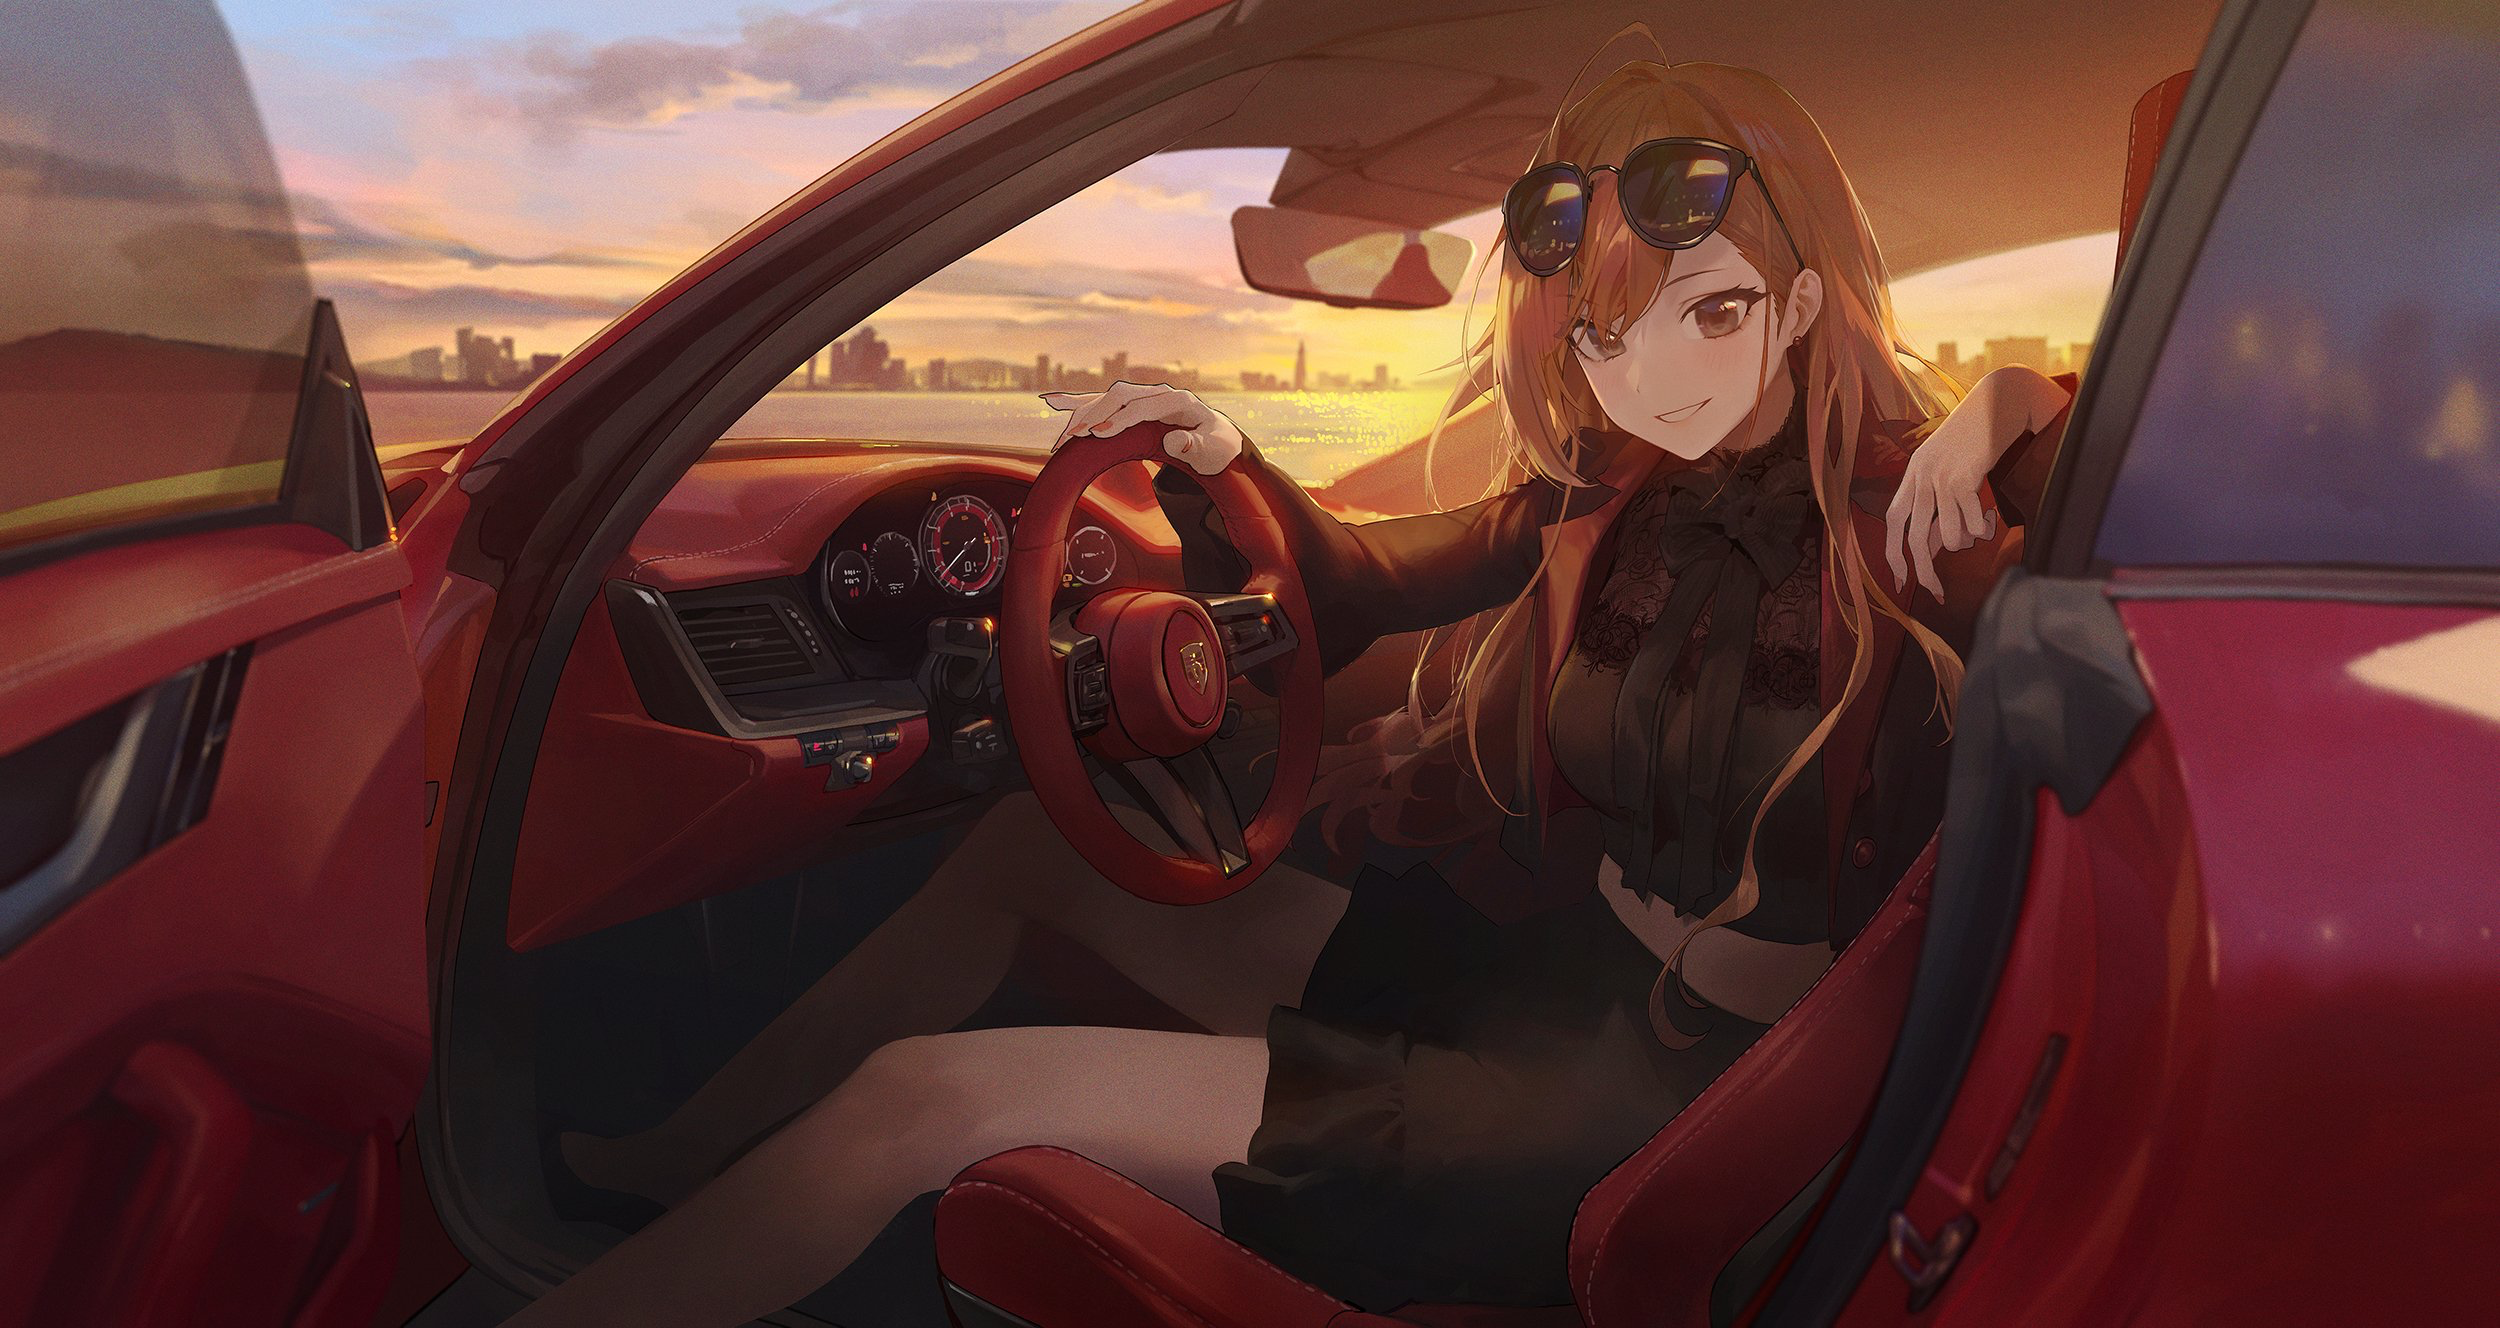 Anime 2500x1328 anime girls red cars Mossi (artist) THE iDOLM@STER arisugawa natsuha THE iDOLM@STER: Shiny Colors Porsche sitting